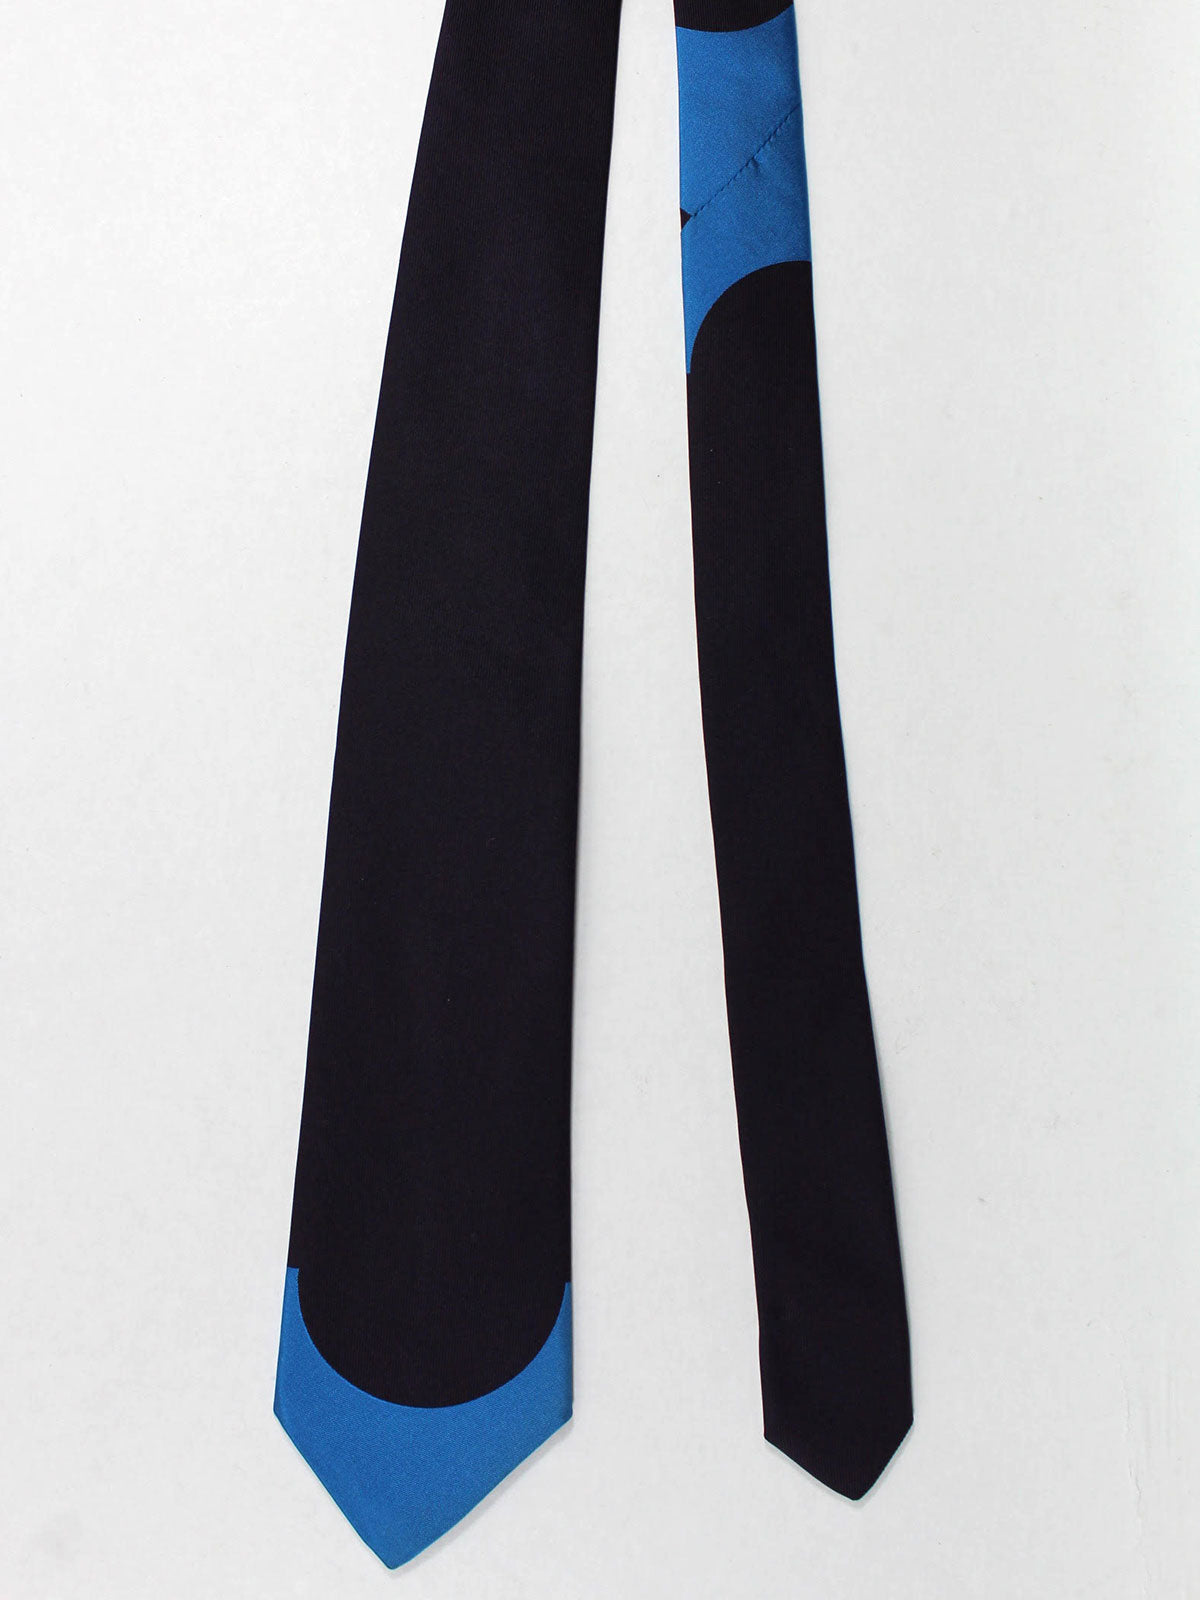 Gene Meyer Tie Dark Blue Aqua Design